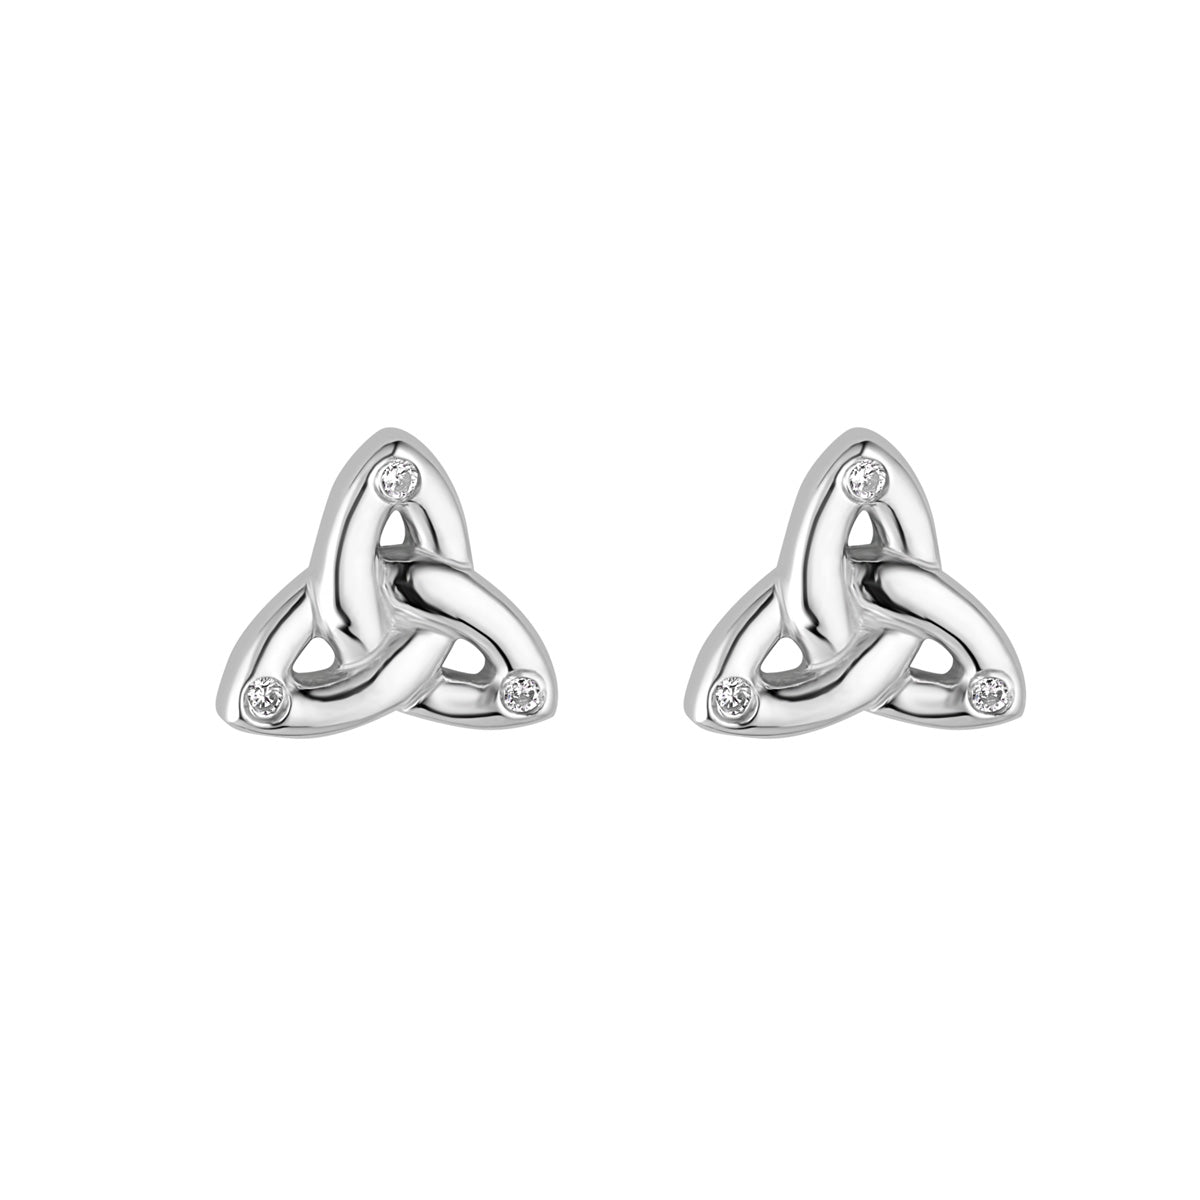 Stock image of Solvar flush set cz trinity knot stud earrings s34210